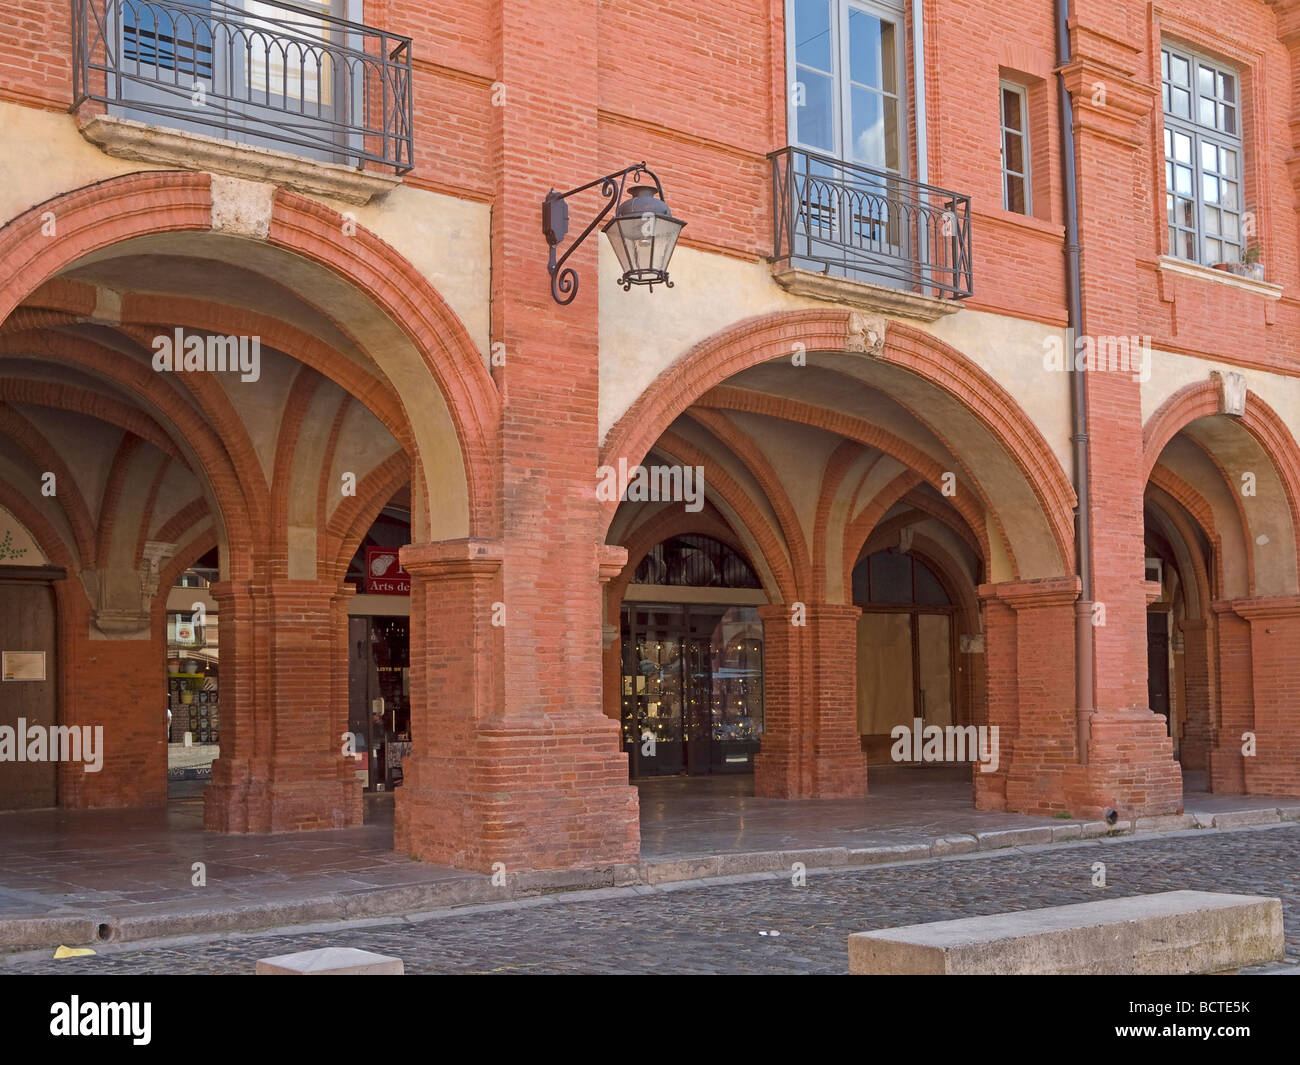 Arkade de la Place Nationale in Montauban mit Läden Arcades de la Place Nationale in Montauban with shops Stock Photo